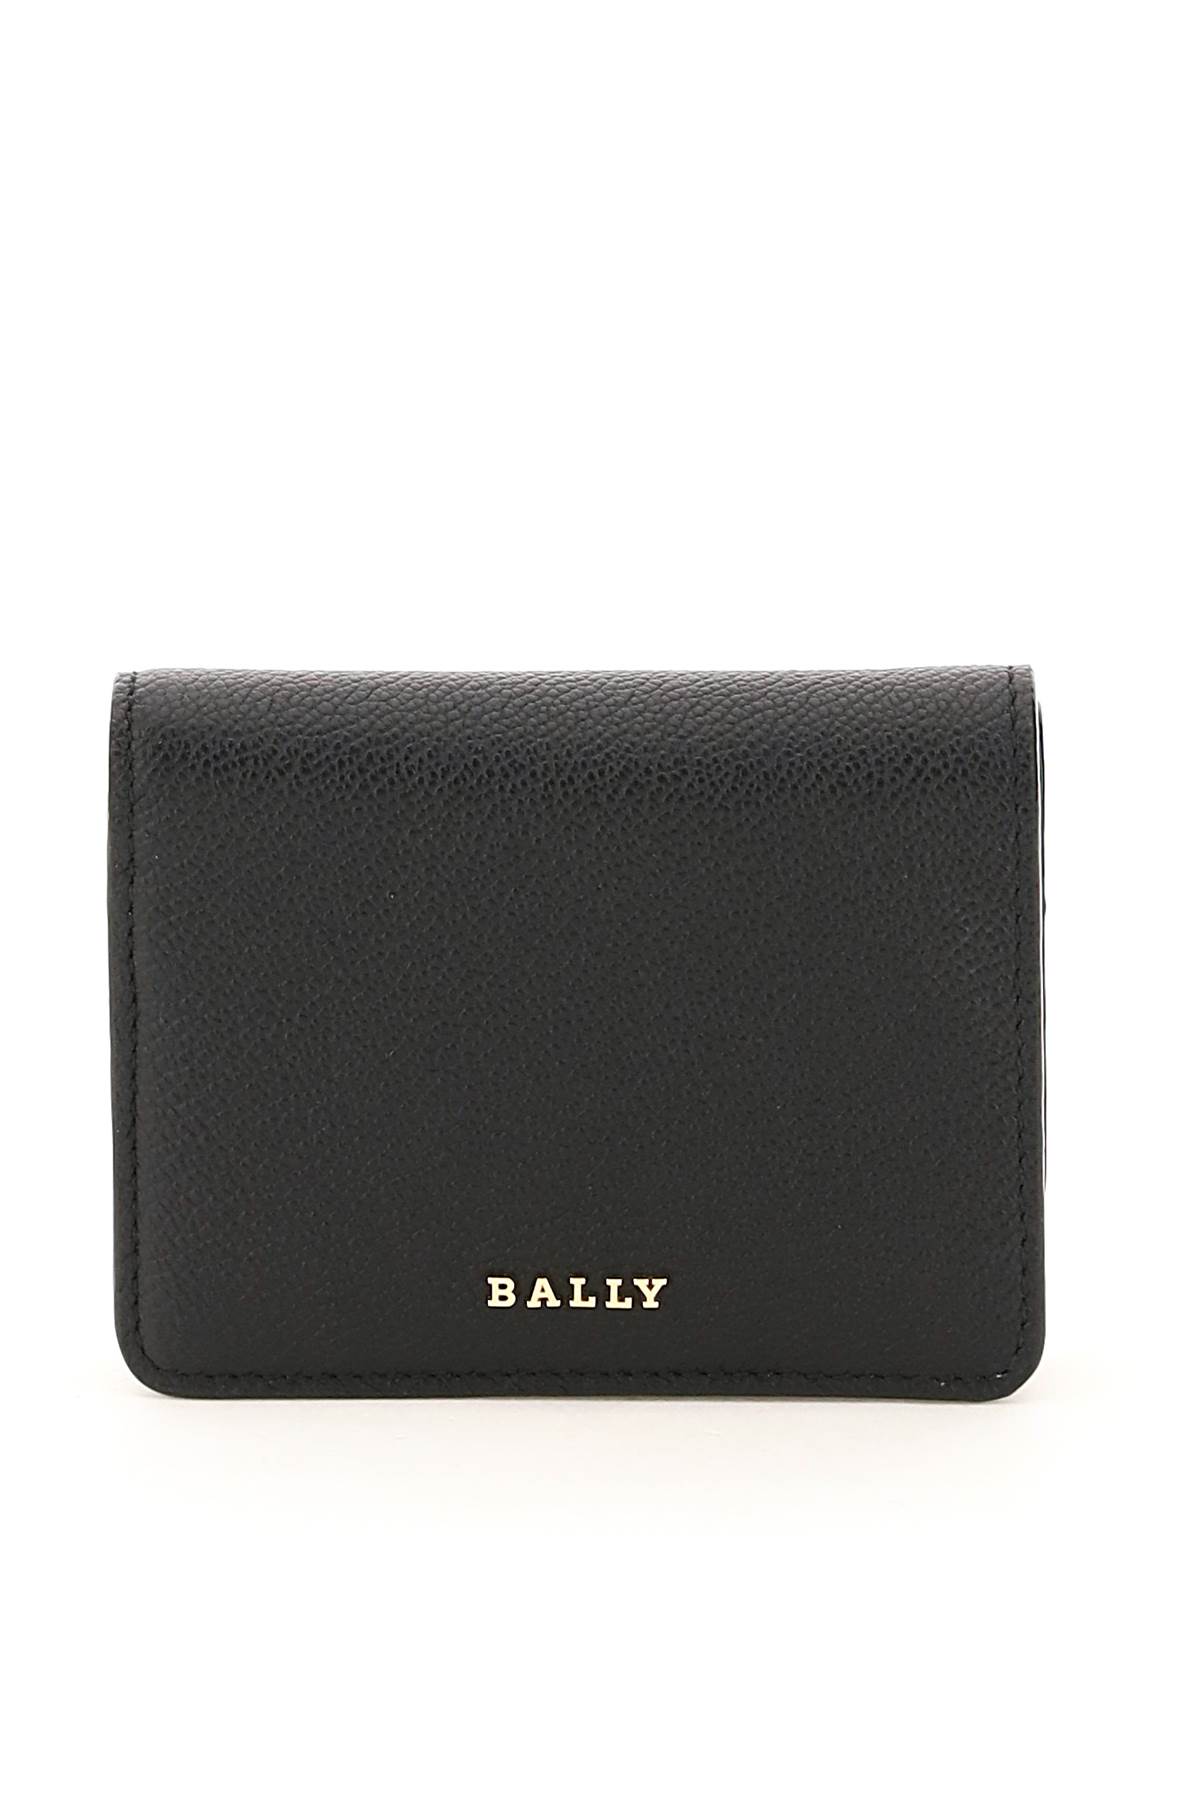 Bally Lettes Leather Bi-fold Card Holder